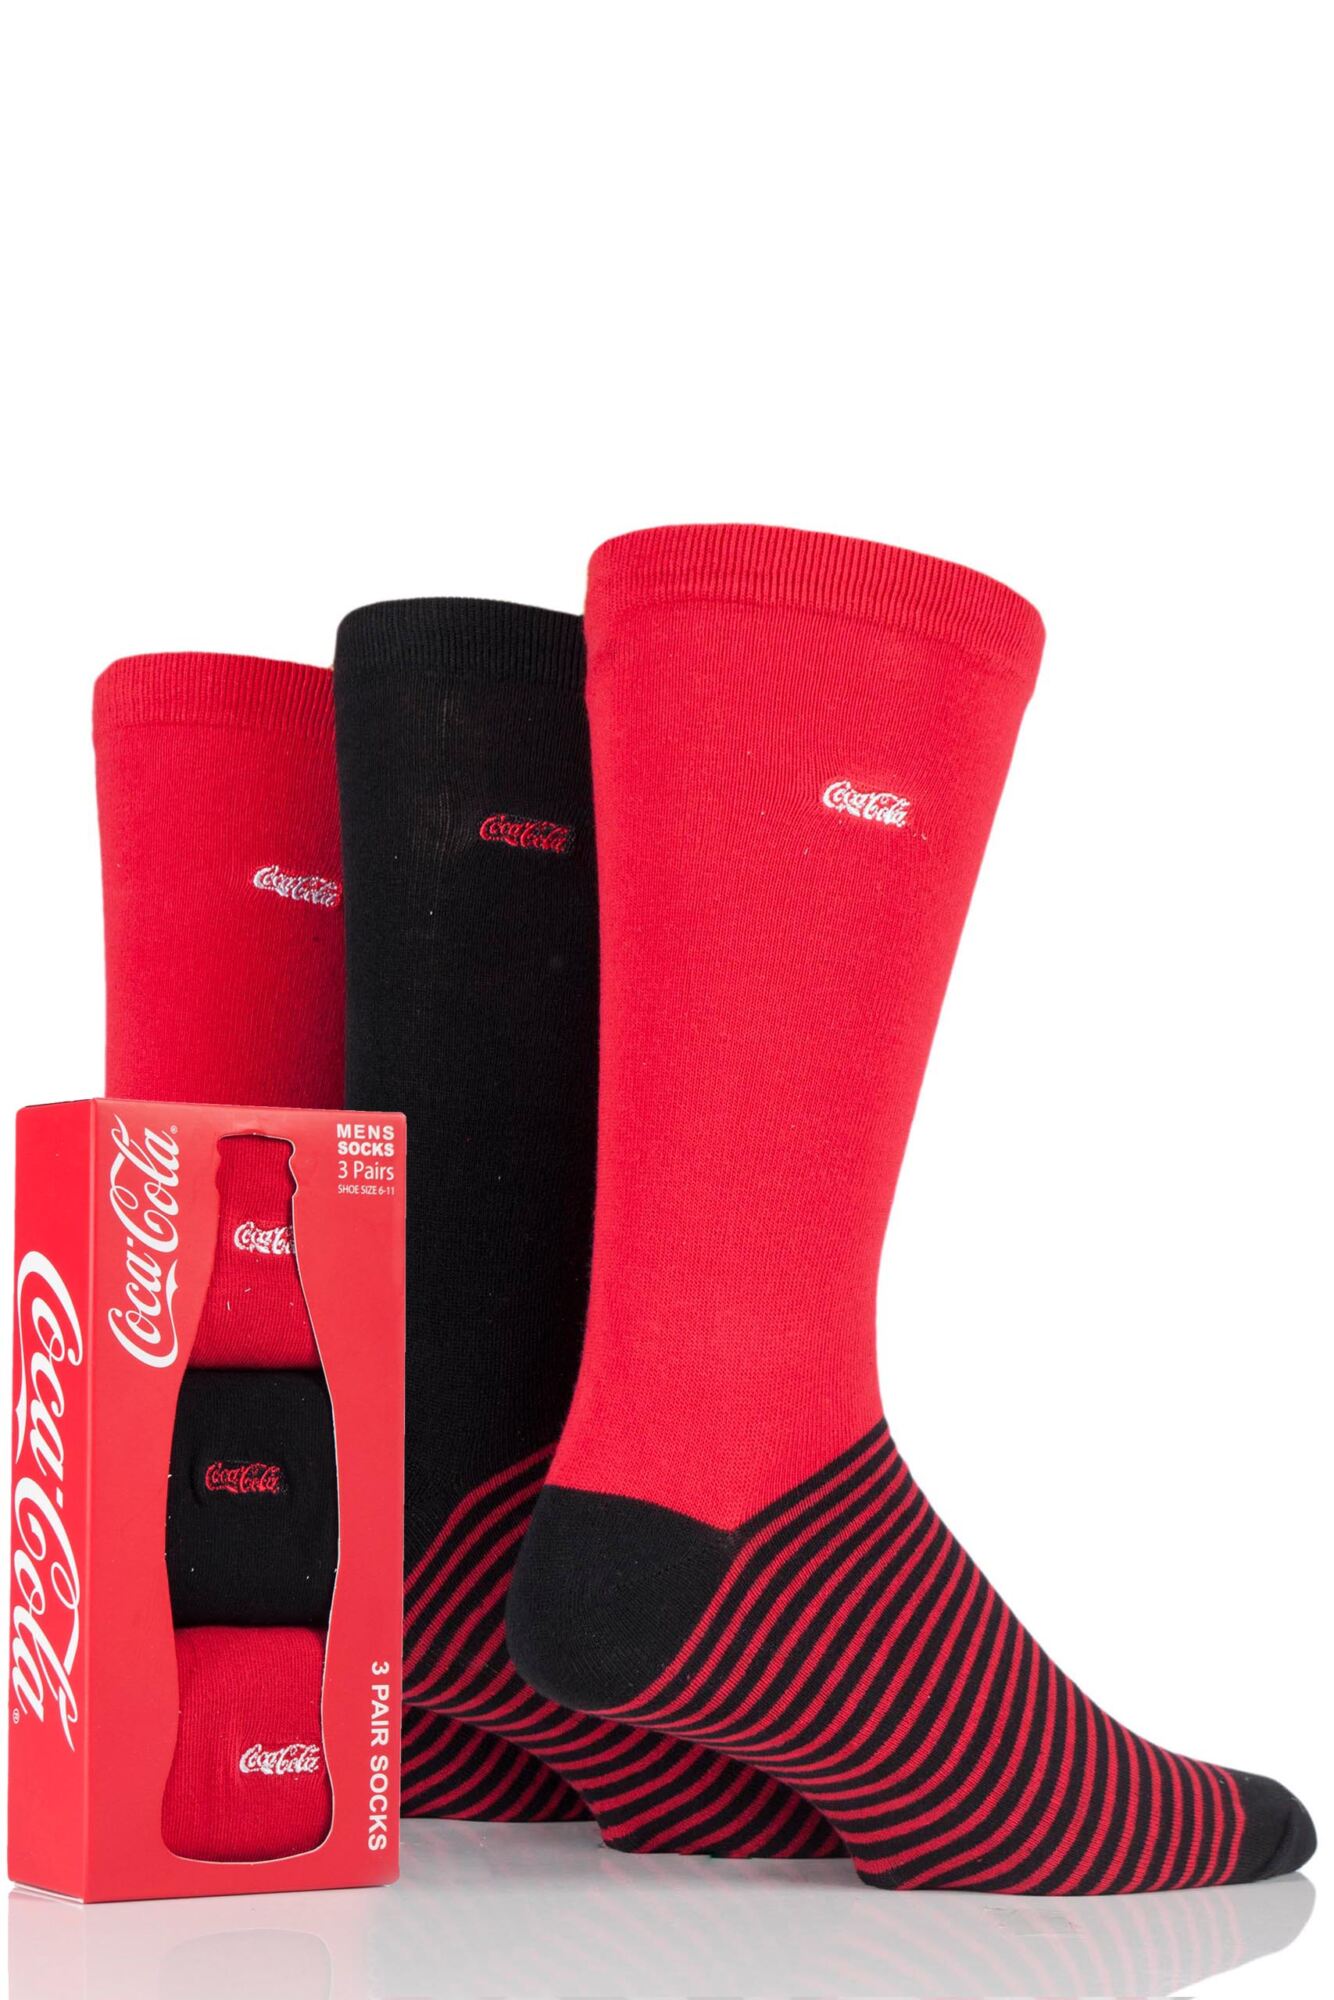 3 Pair Striped Foot Cotton Socks In Gift Box Men's - Coca Cola